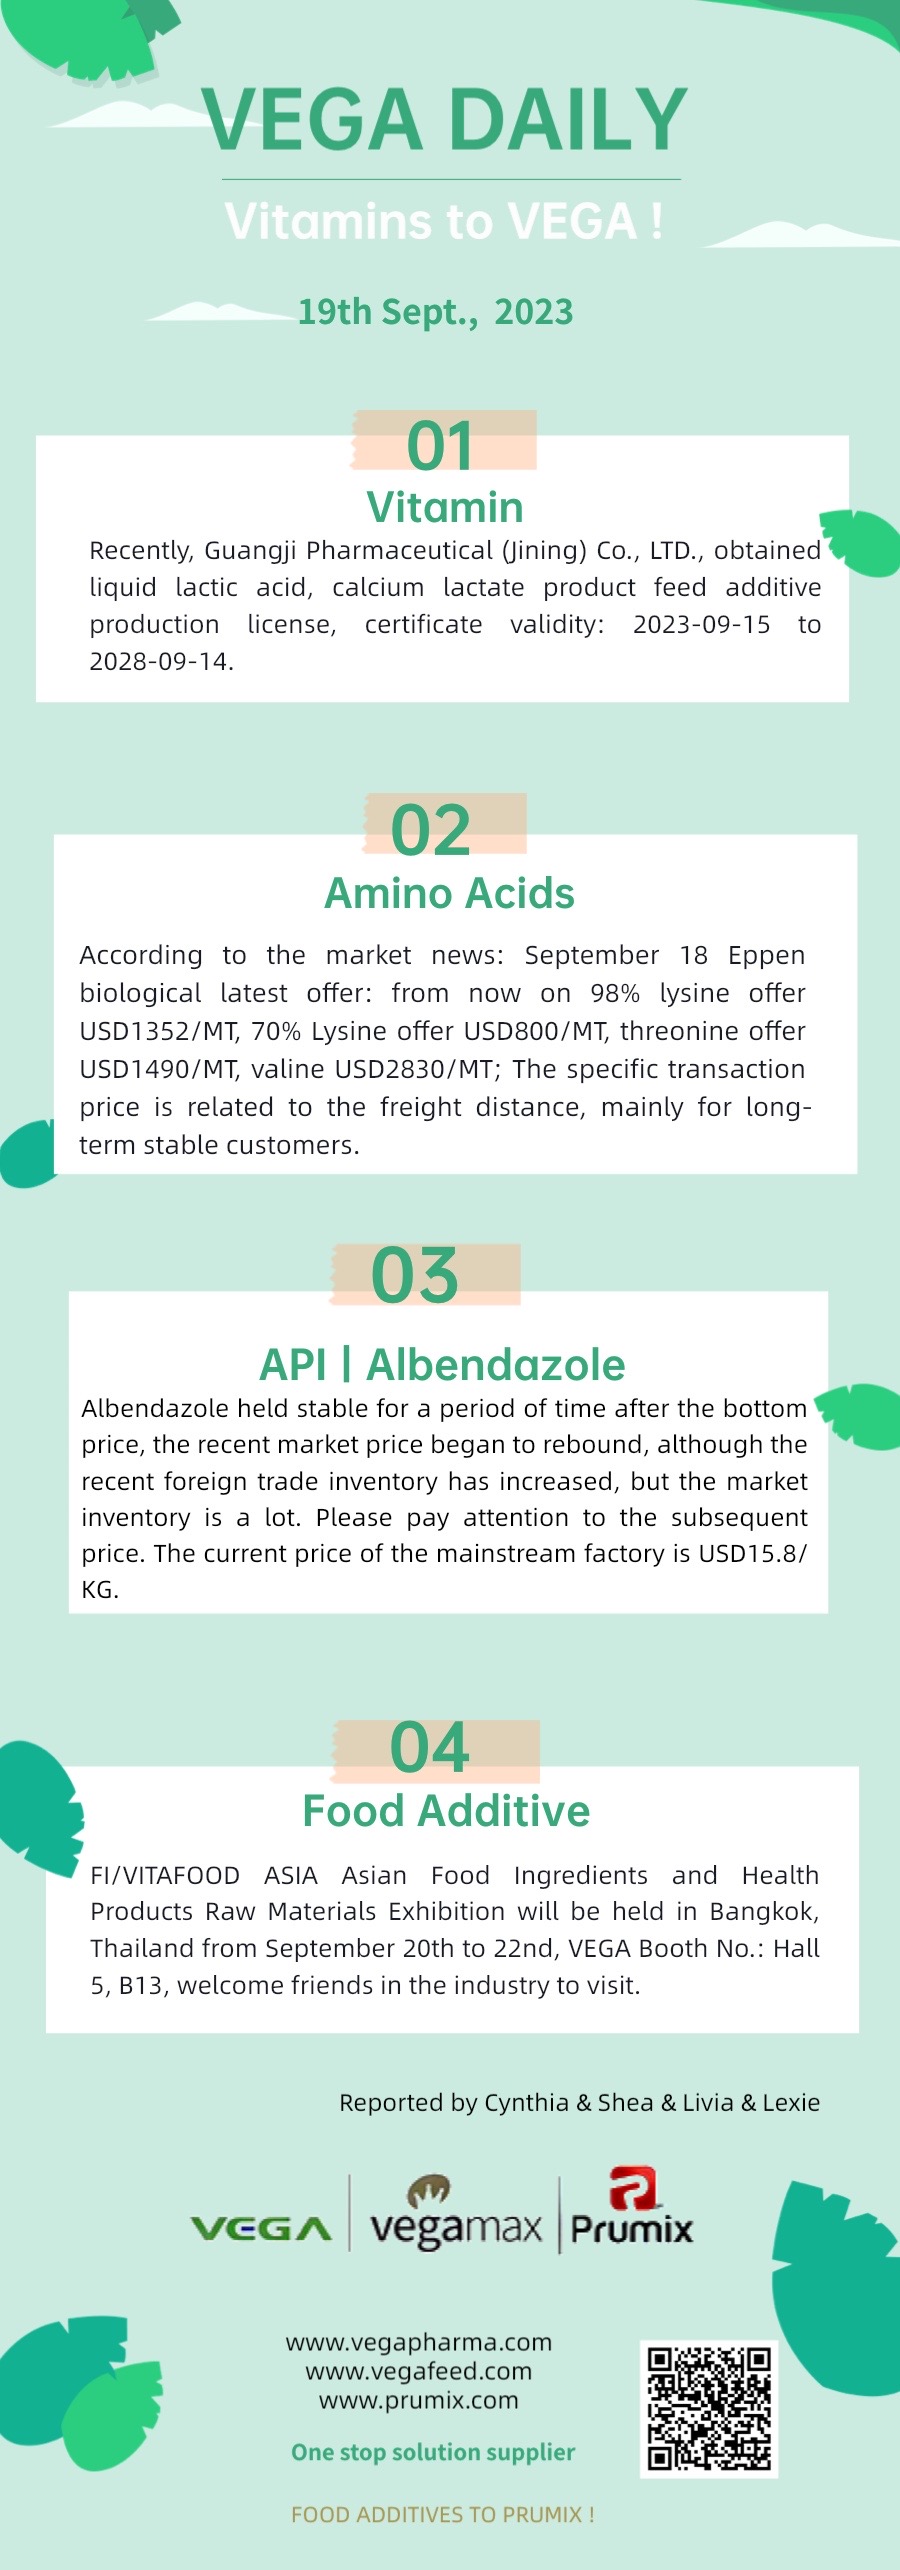 Vega Daily Dated on Sept 19th 2023 Vitamin Amino Acid API Food Additives.jpg